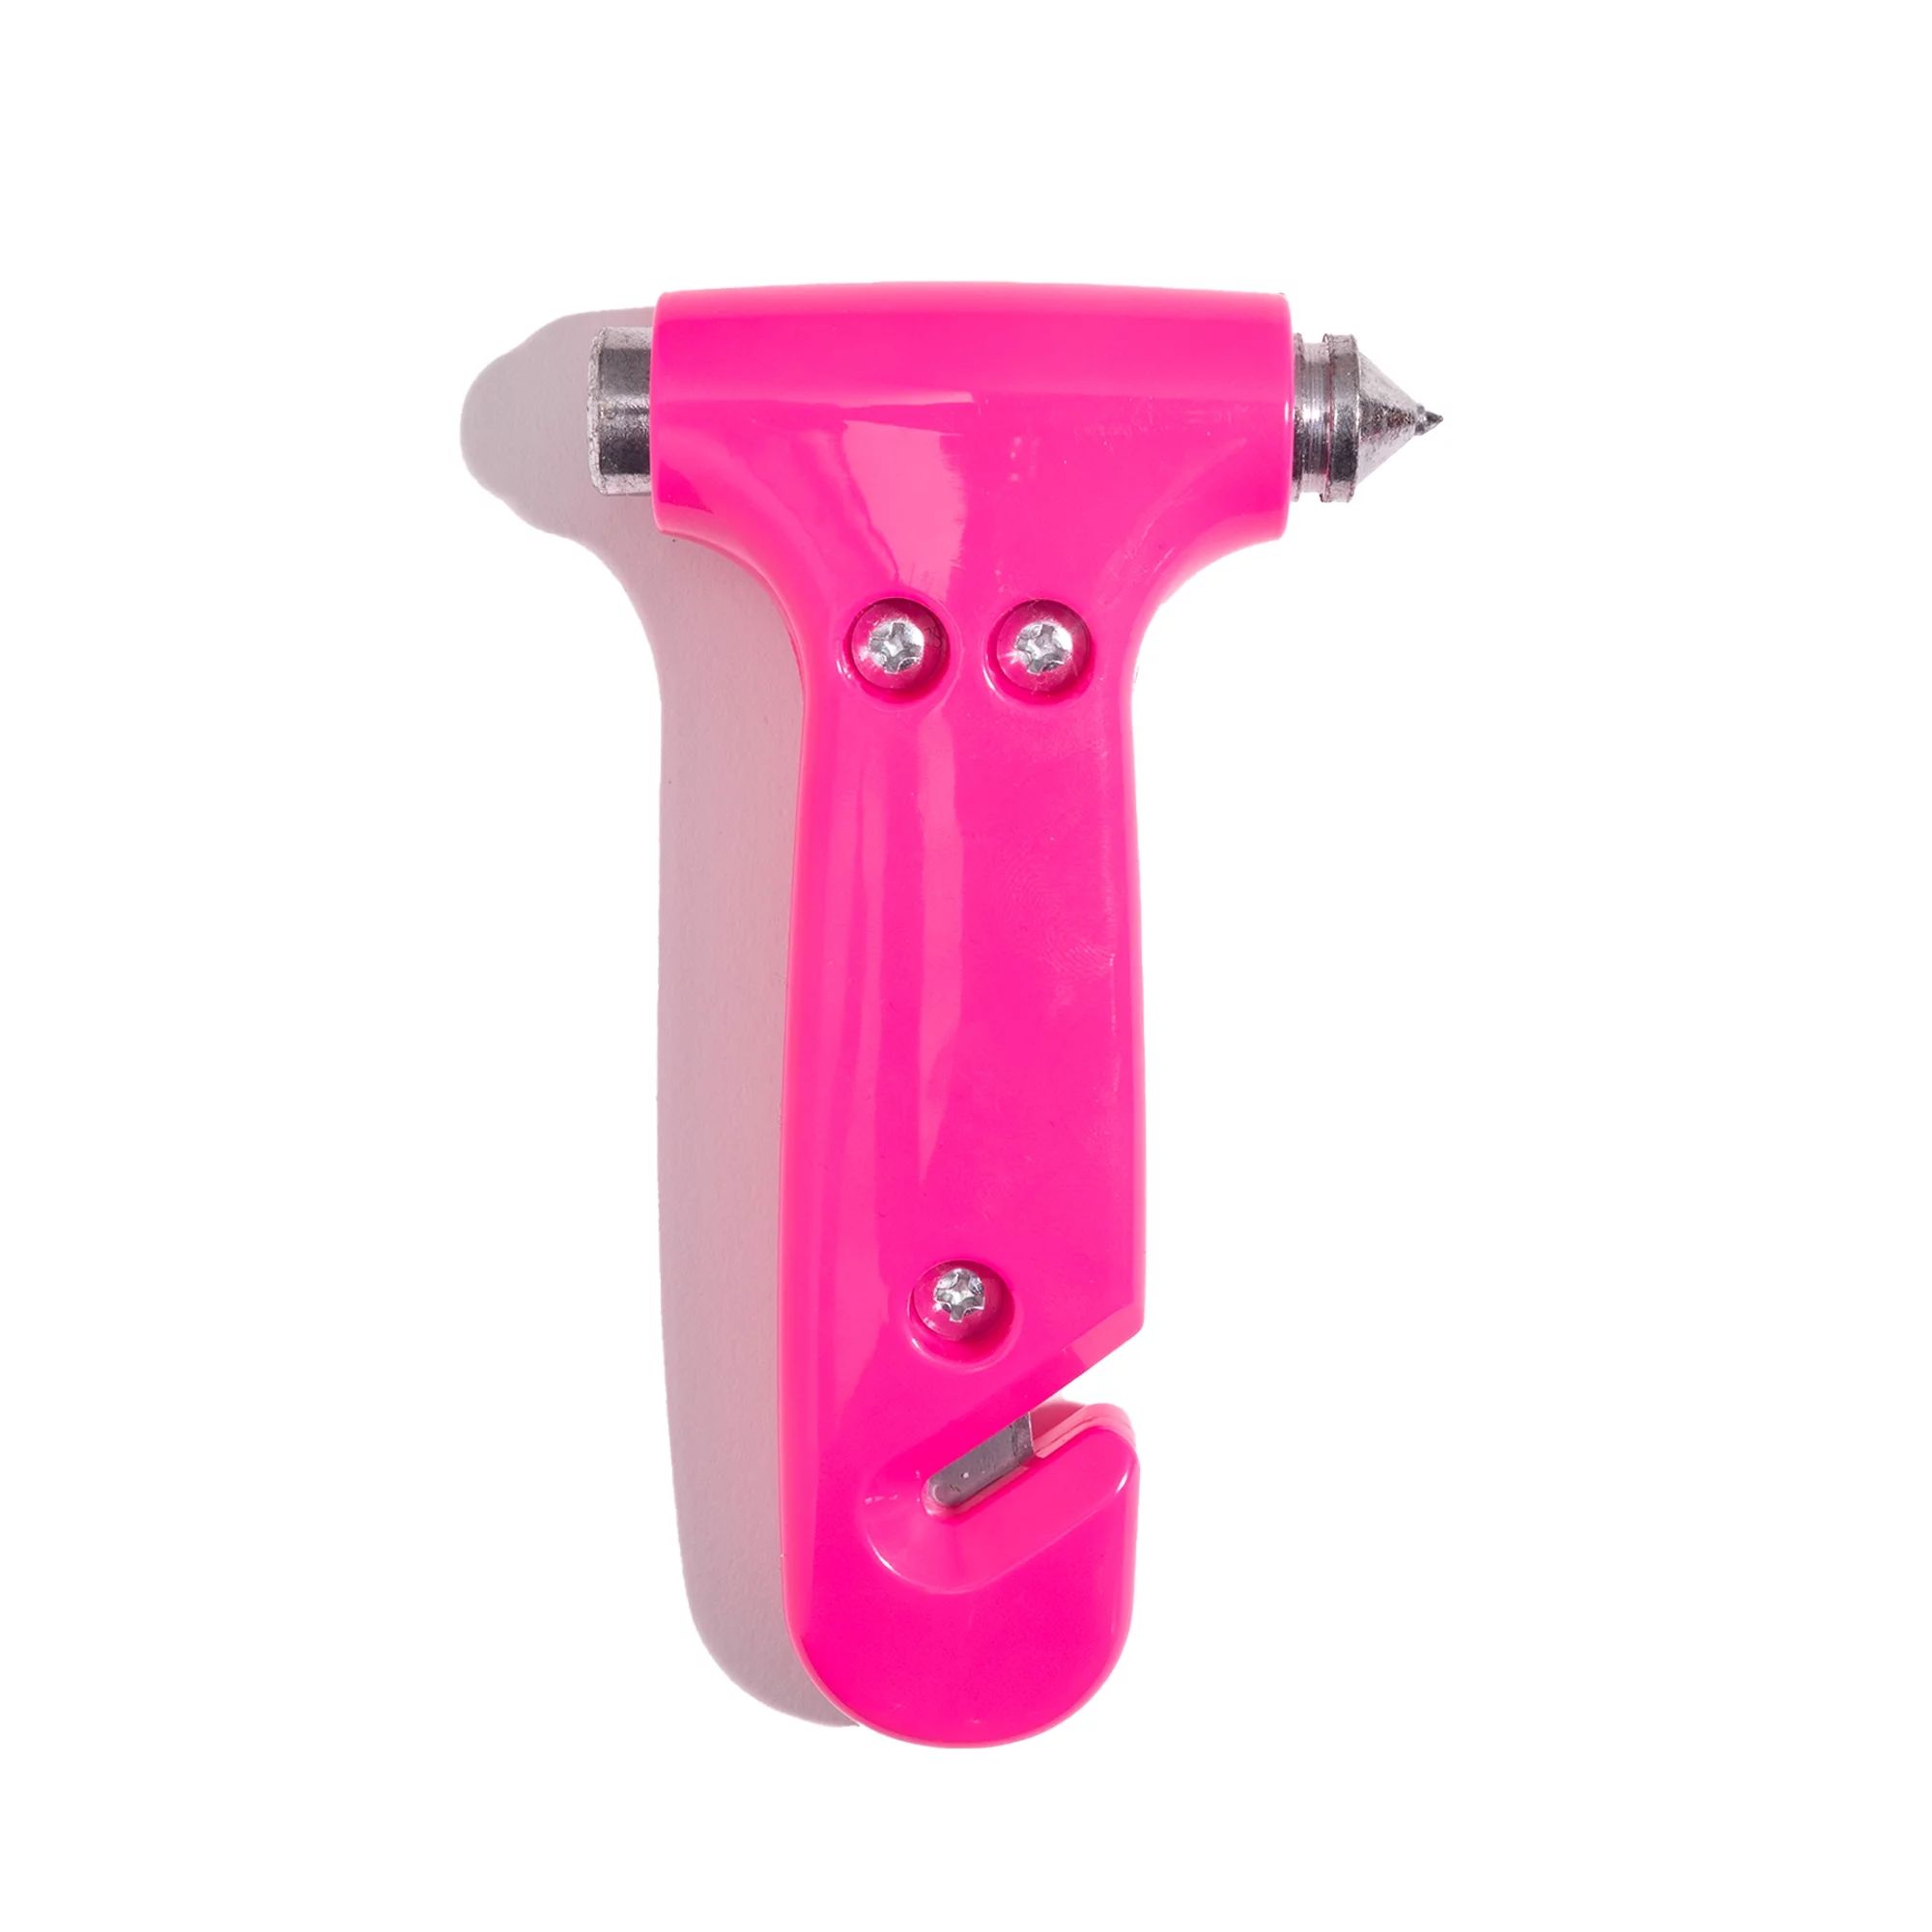 Super-Cute Emergency Escape Hammer and Seatbelt Cutter, Pink | Walmart (US)